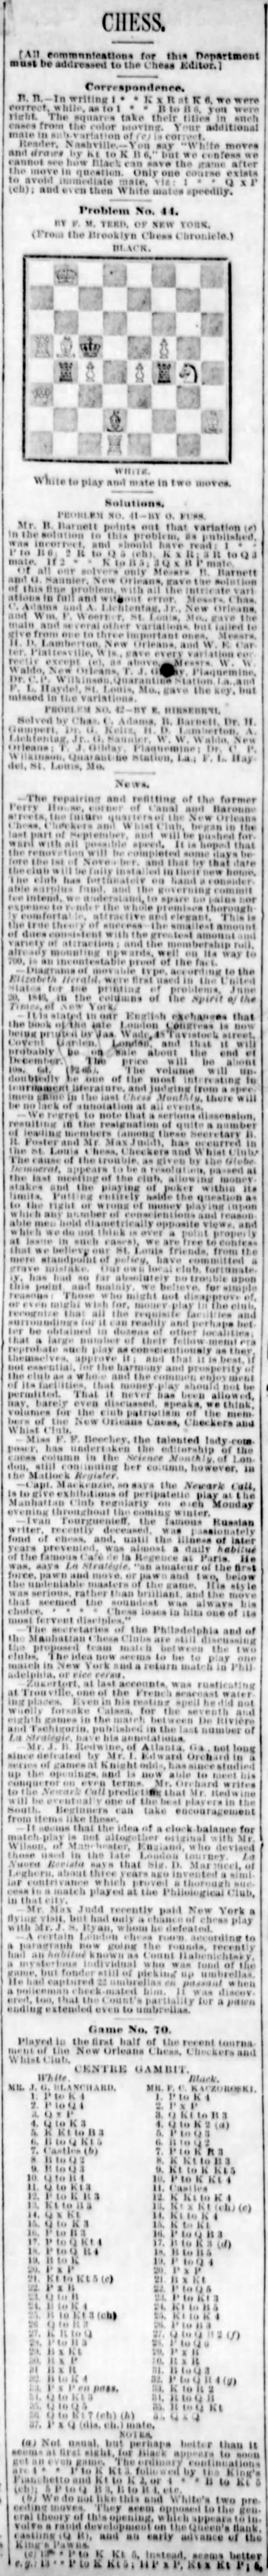 1883.10.07-01 New Orleans Times-Democrat.jpg